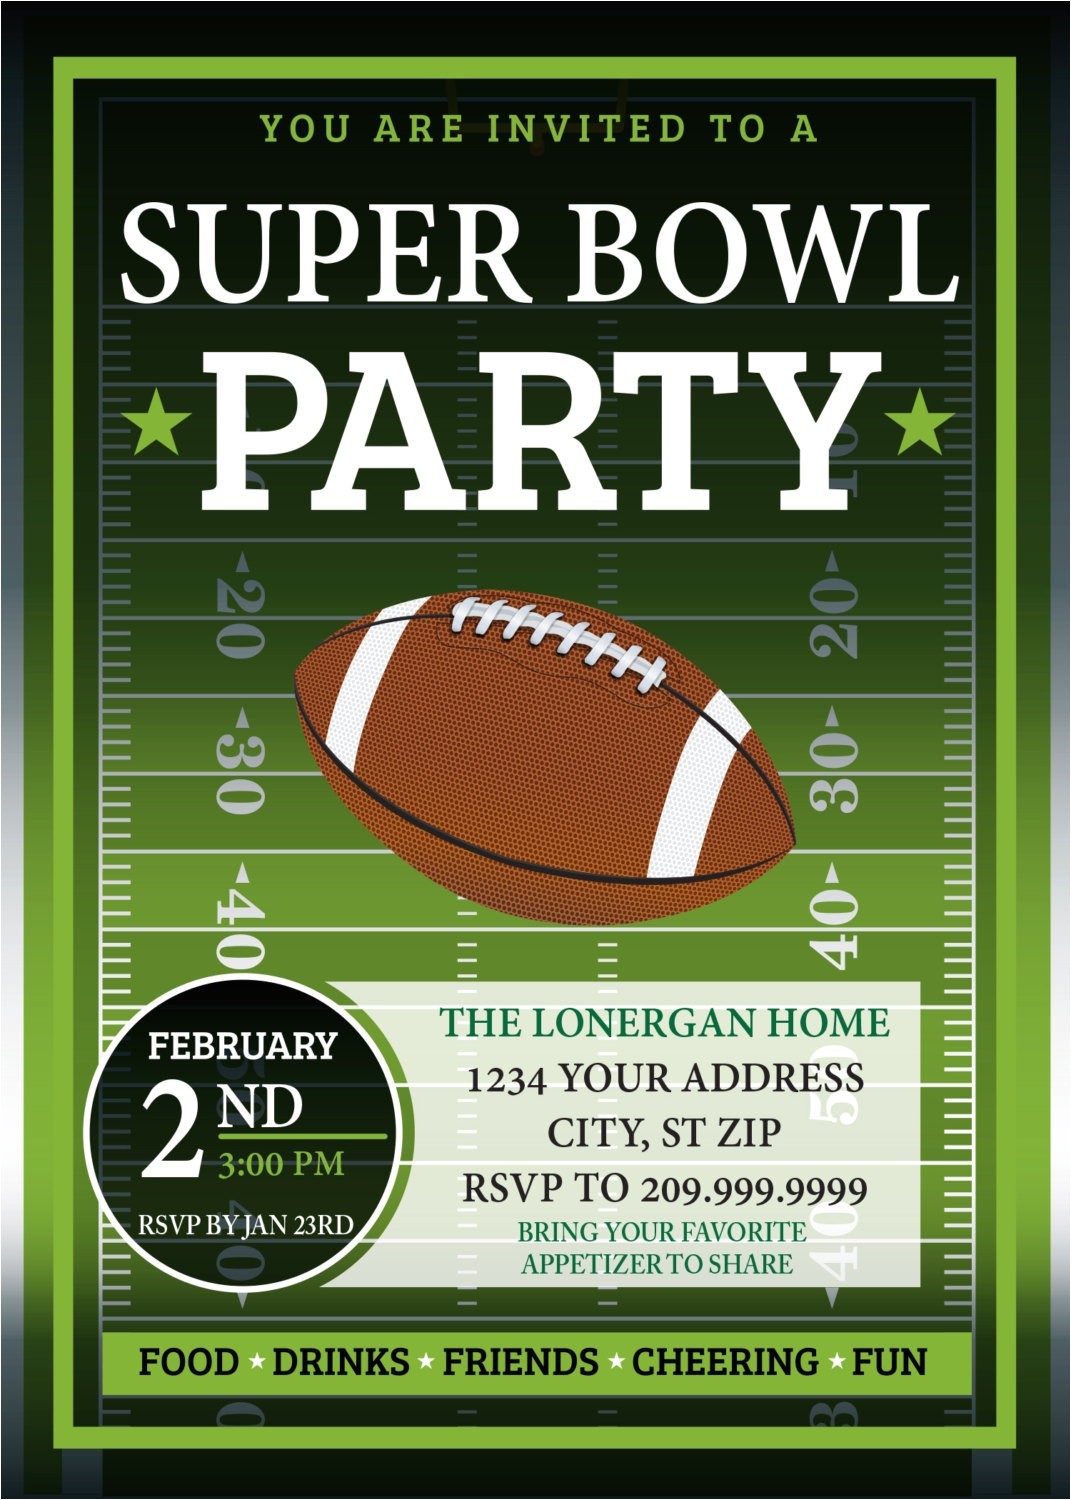 Super Bowl Party Invitations Free Printable You 39 Ll Want 2015 Super Bowl Invitations Fashion Blog